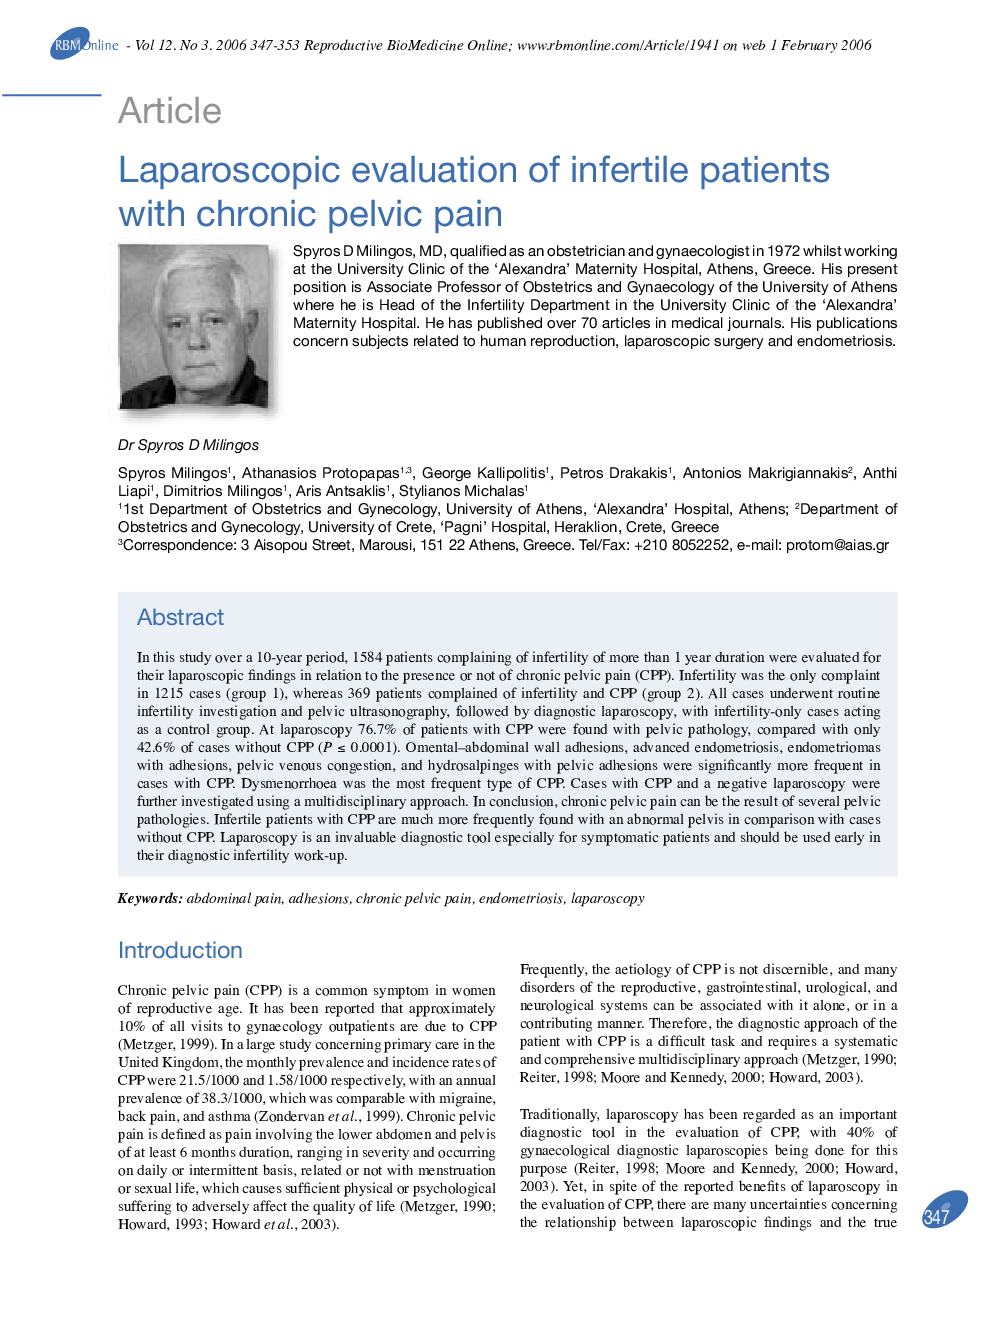 Laparoscopic evaluation of infertile patients with chronic pelvic pain